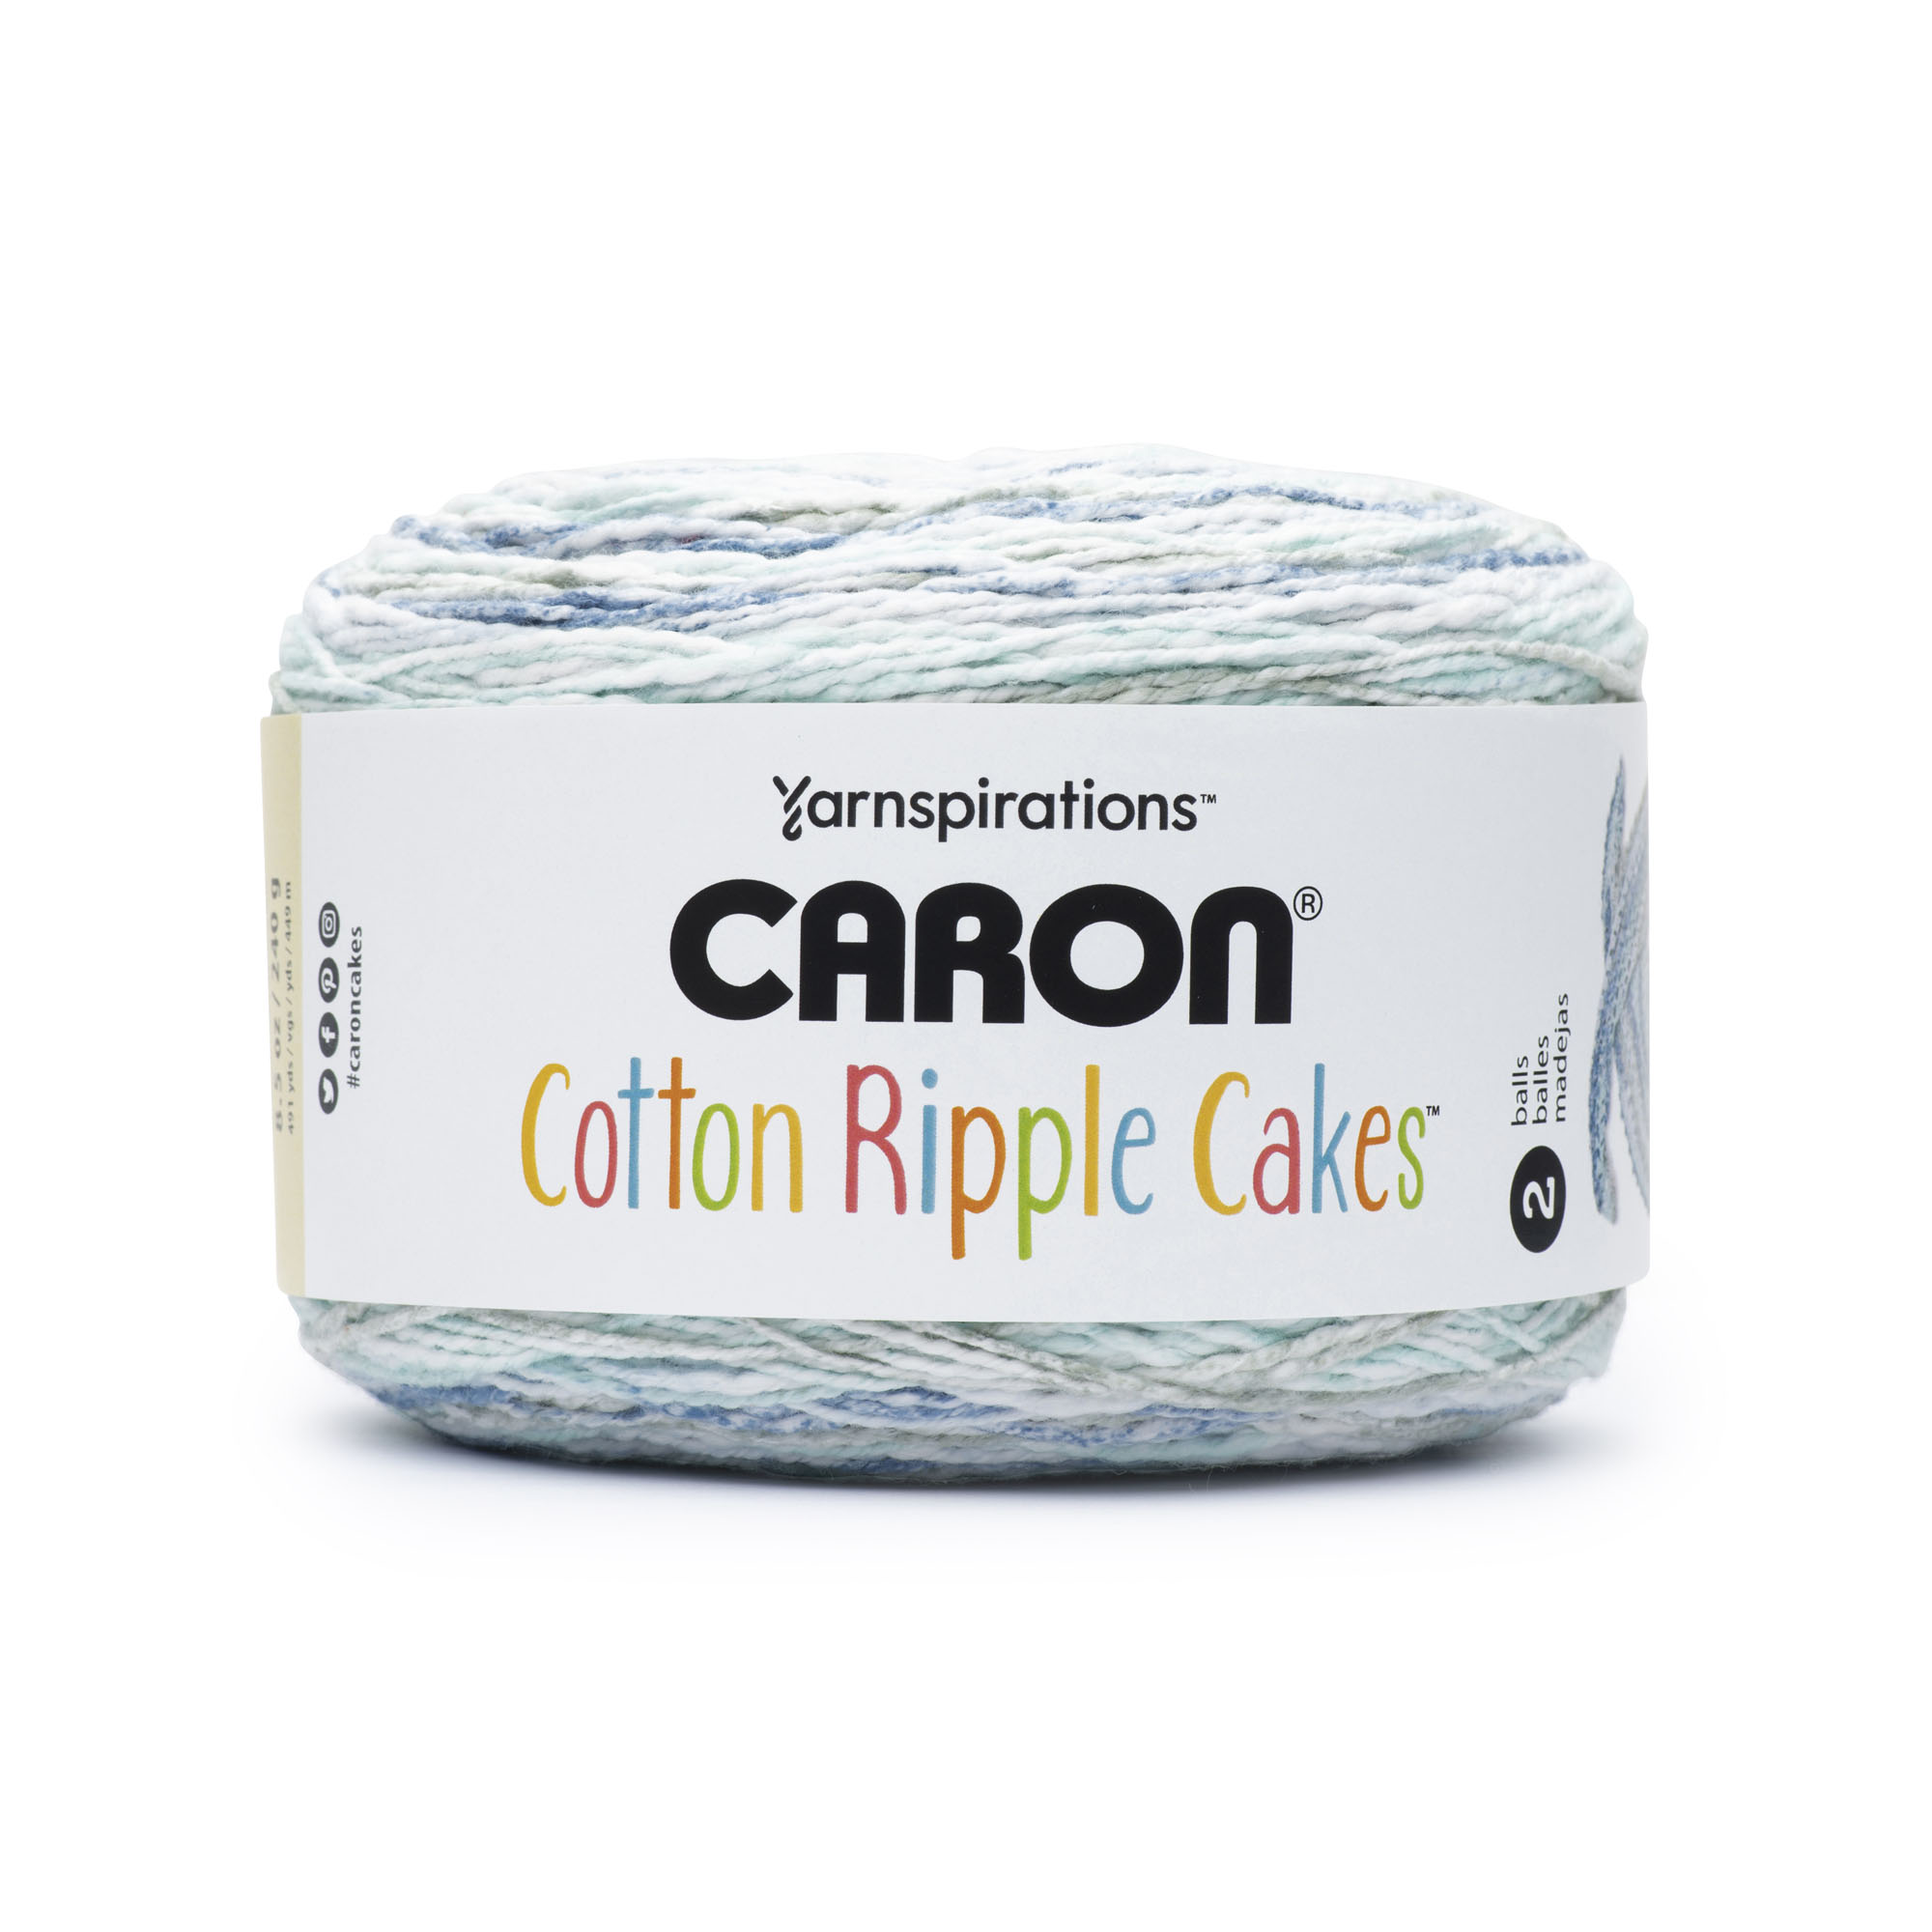 Caron Cotton Ripple Cakes 250g